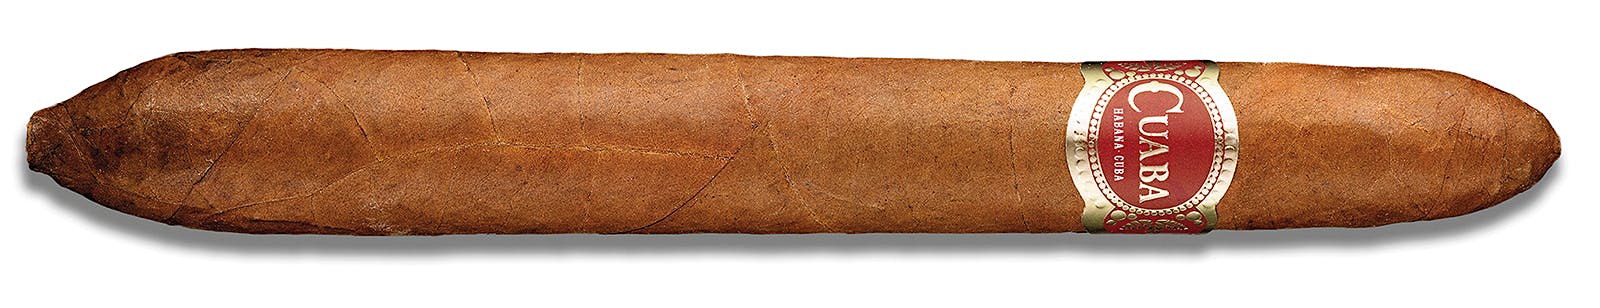 Cuaba Salomon cigar